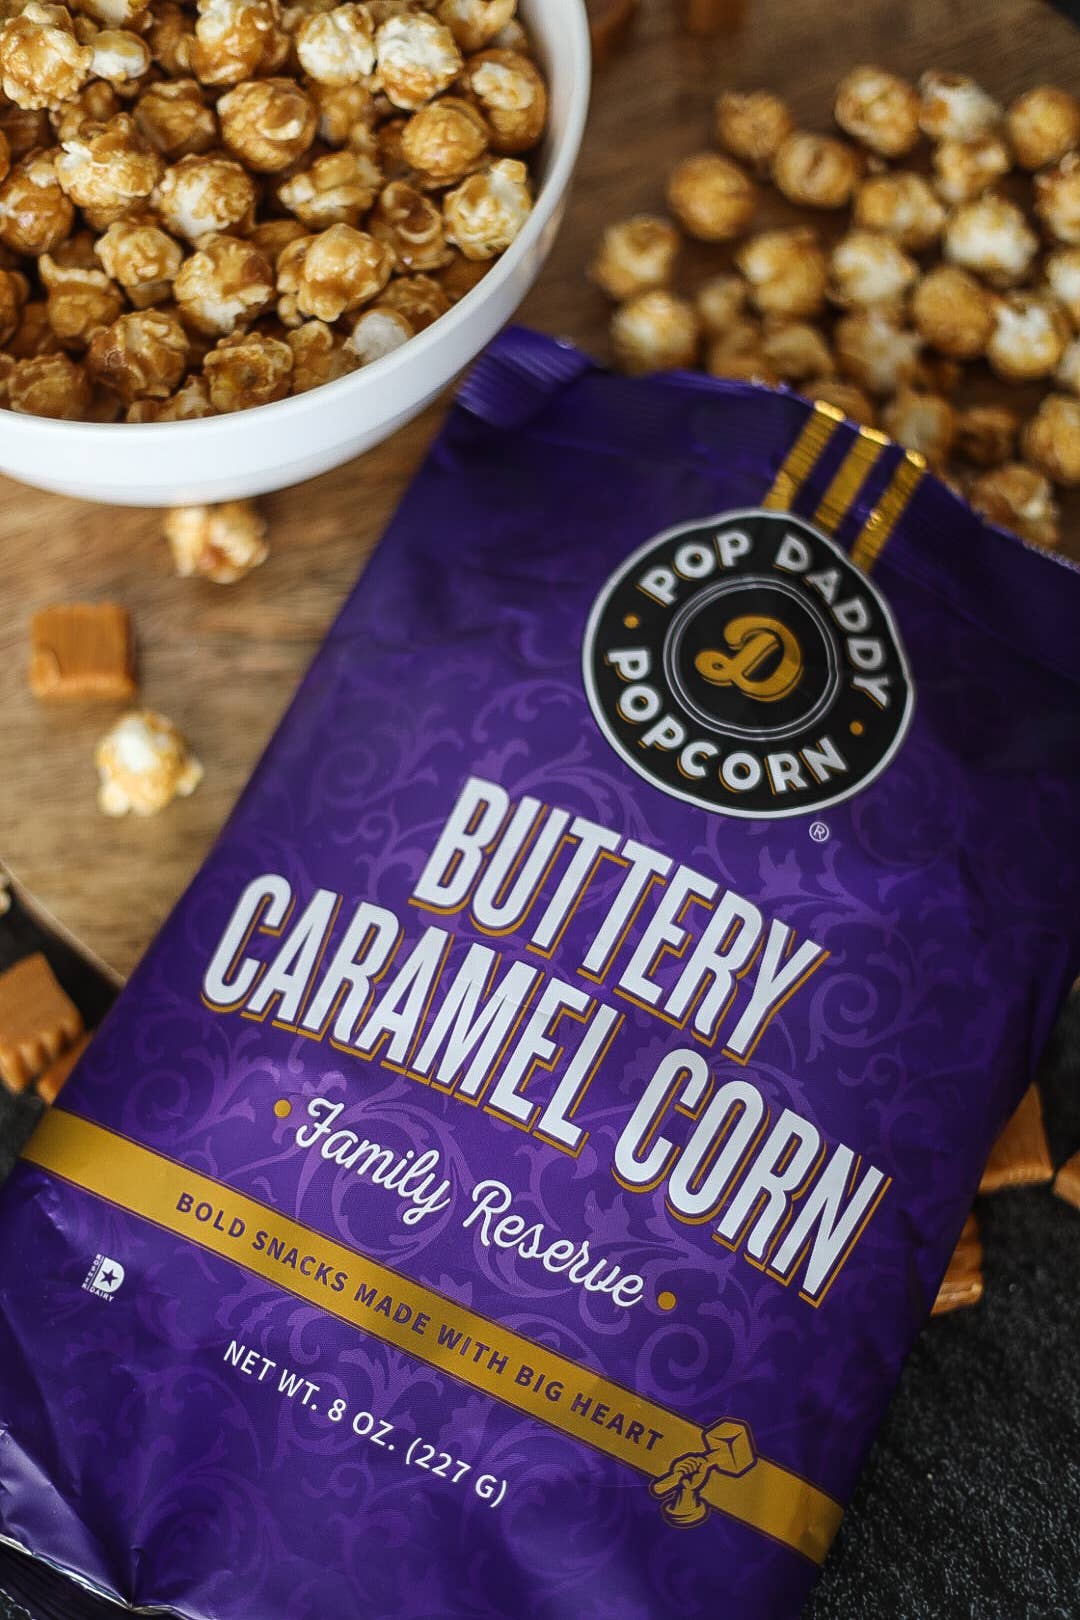 Pop Daddy Premium Buttery Caramel Corn Family Reserve 8oz.